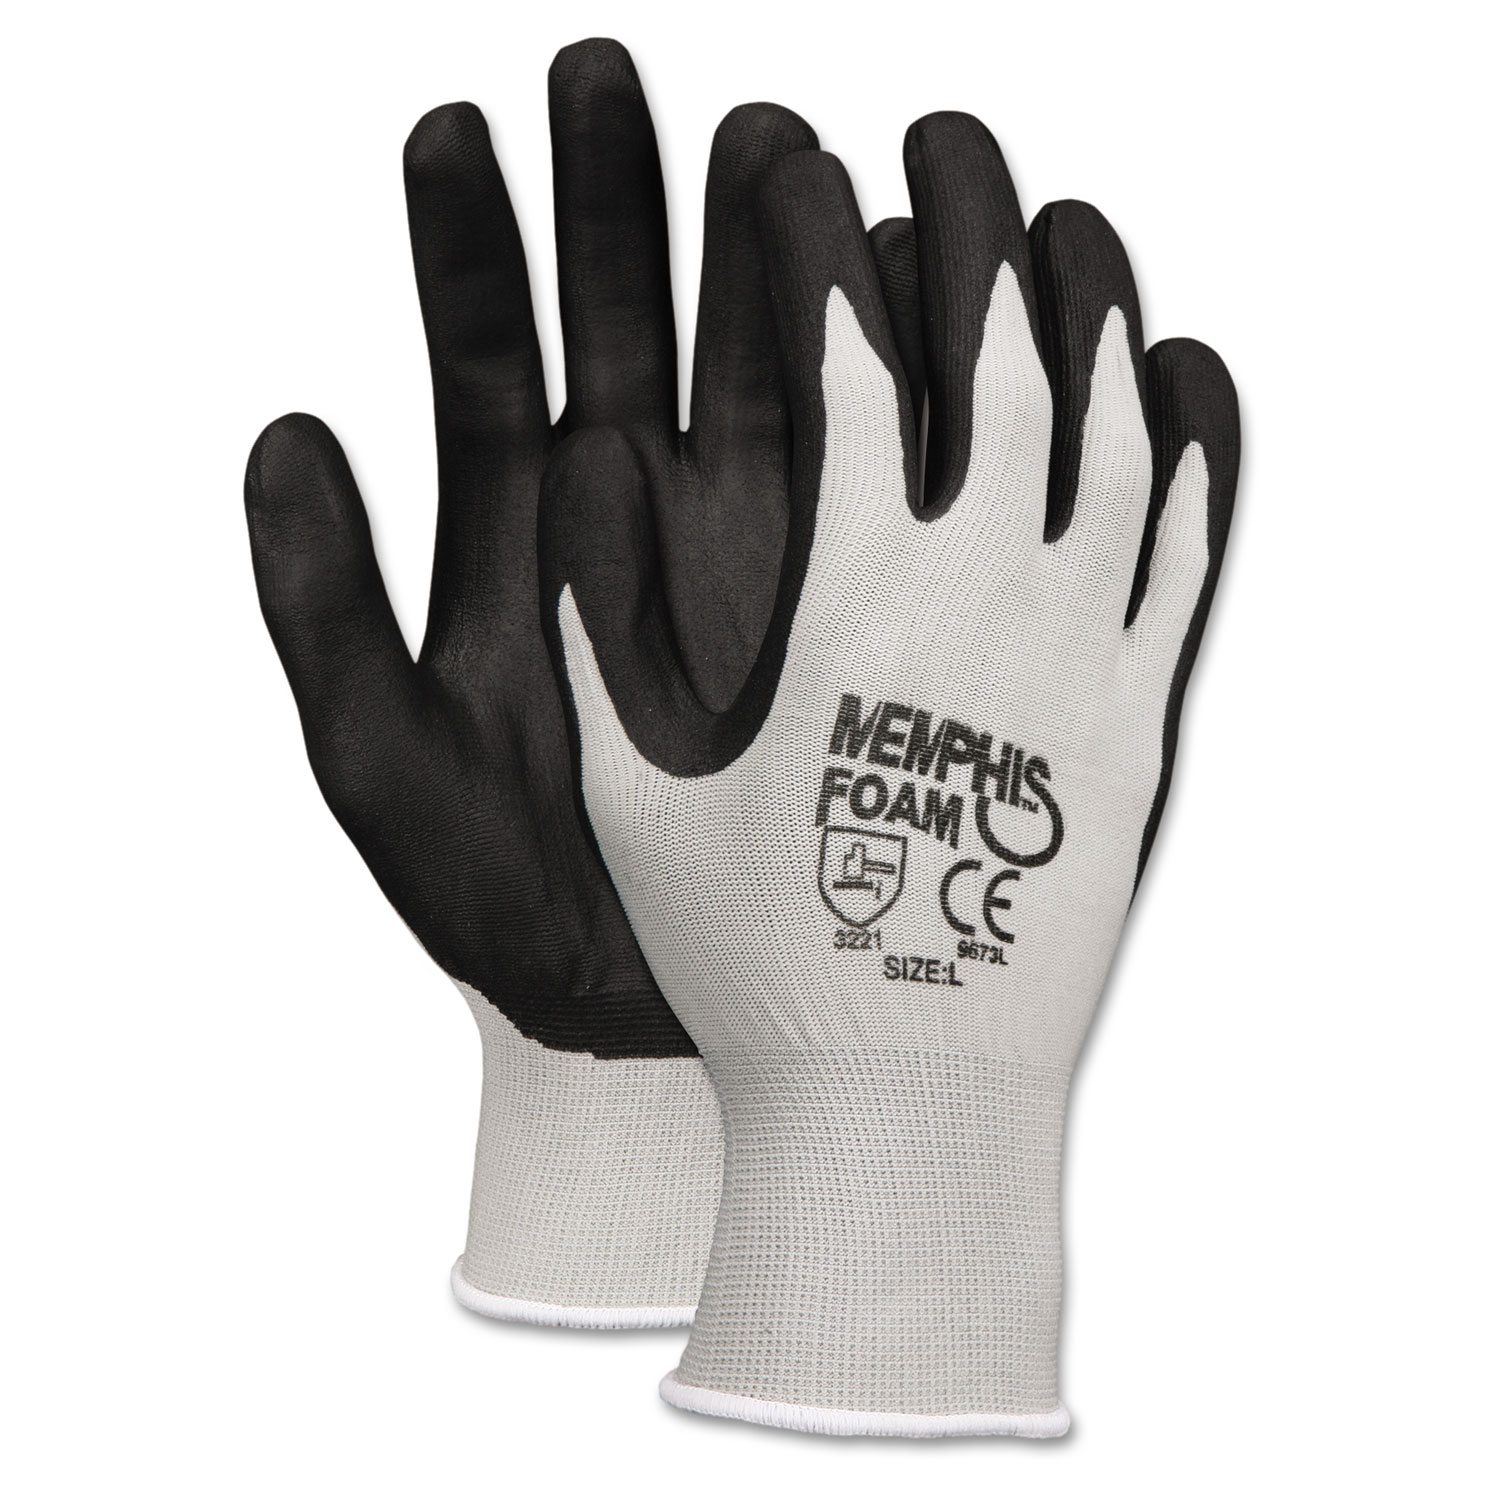  MCR Safety 9673M Economy Foam Nitrile Gloves, Medium, Gray/Black, 12 Pairs (CRW9673M) 